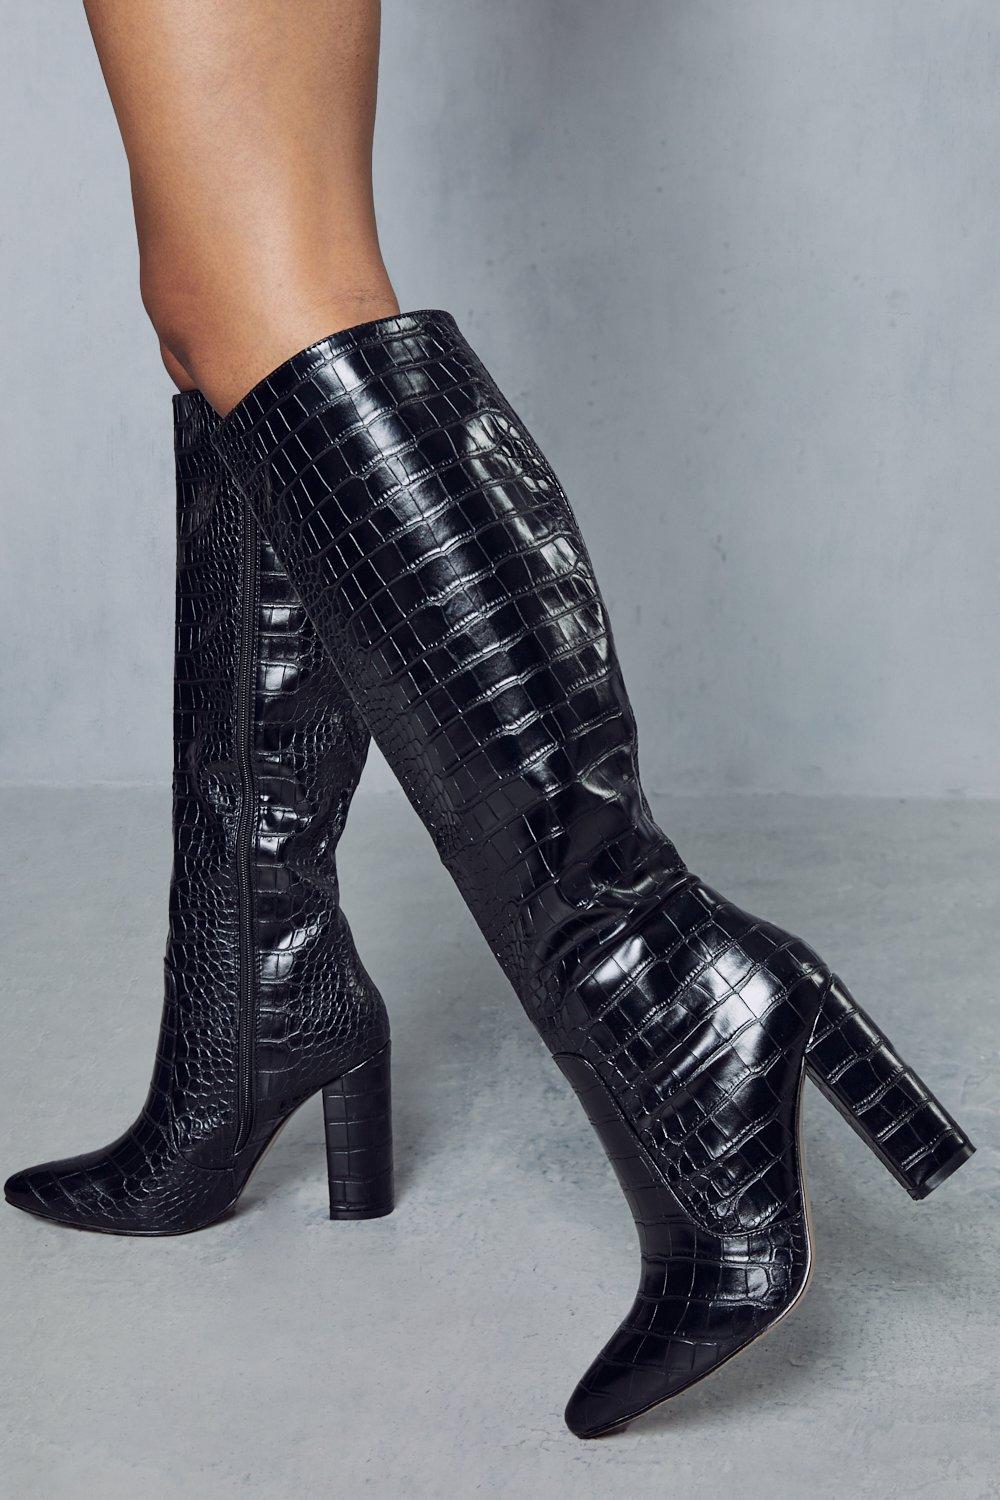 womens croc knee high heeled boots - black - 3, black